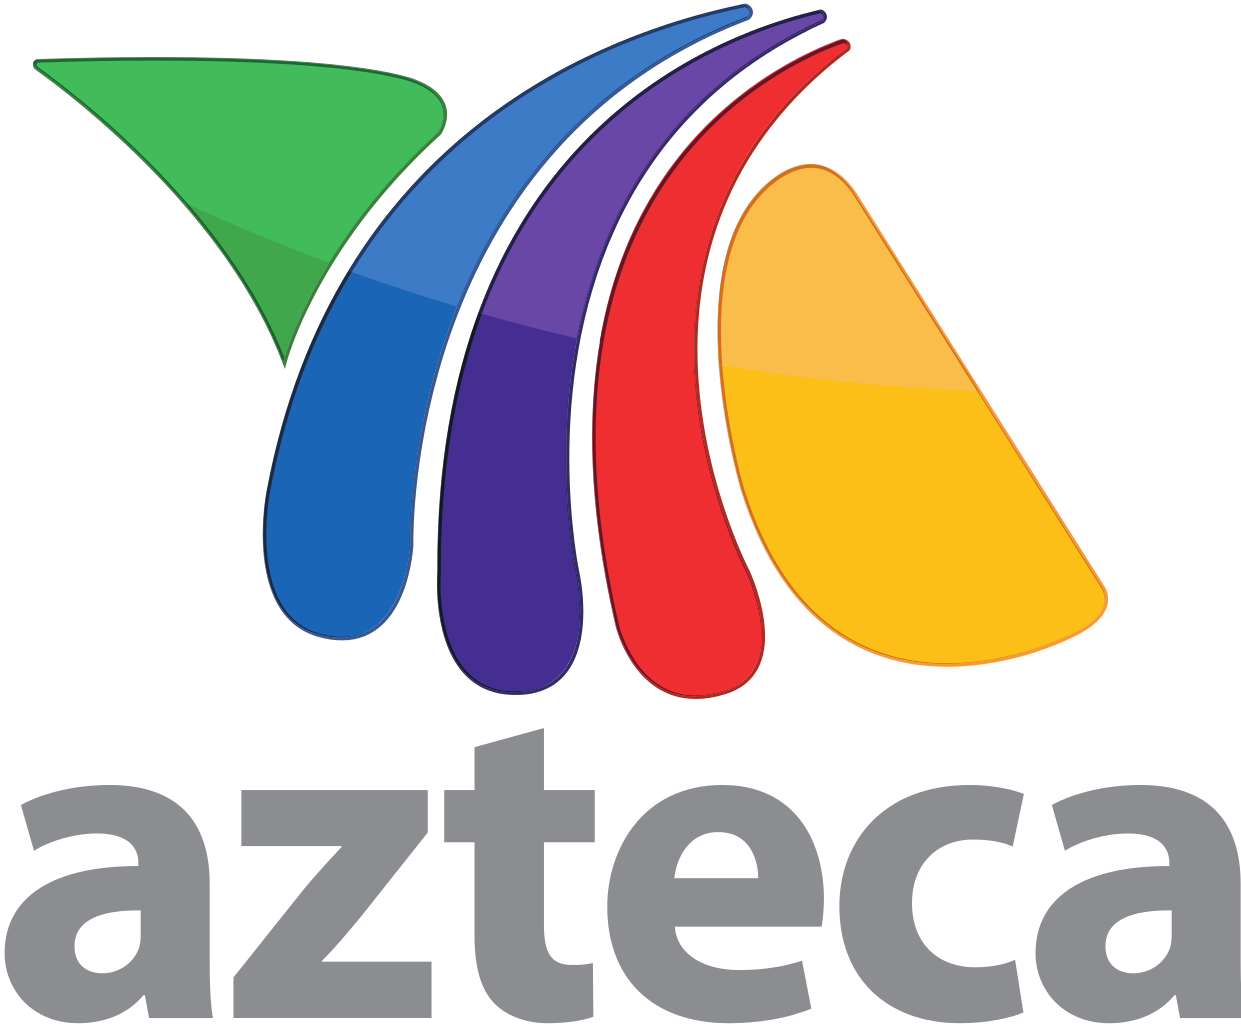 Azteca_TV_logo.svg.png